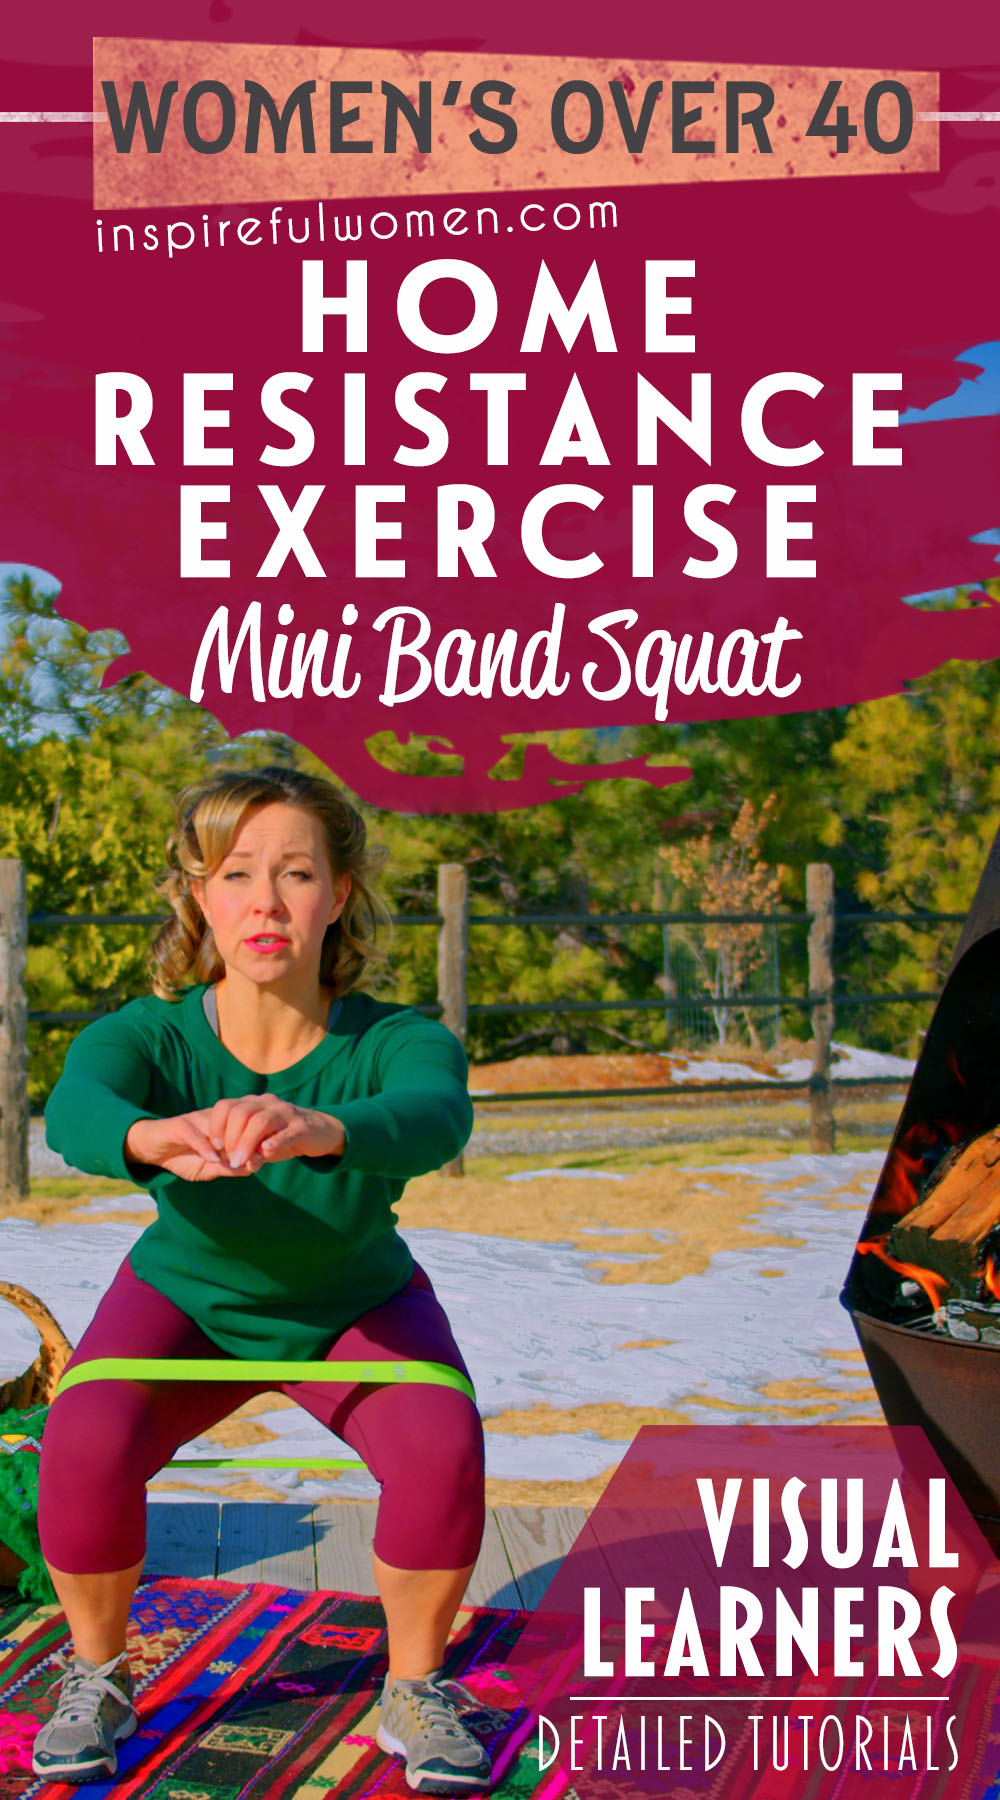 mini-band-squats-glute-medius-hip-external-rotators-lower-body-exercise-home-strength-training-women-above-40